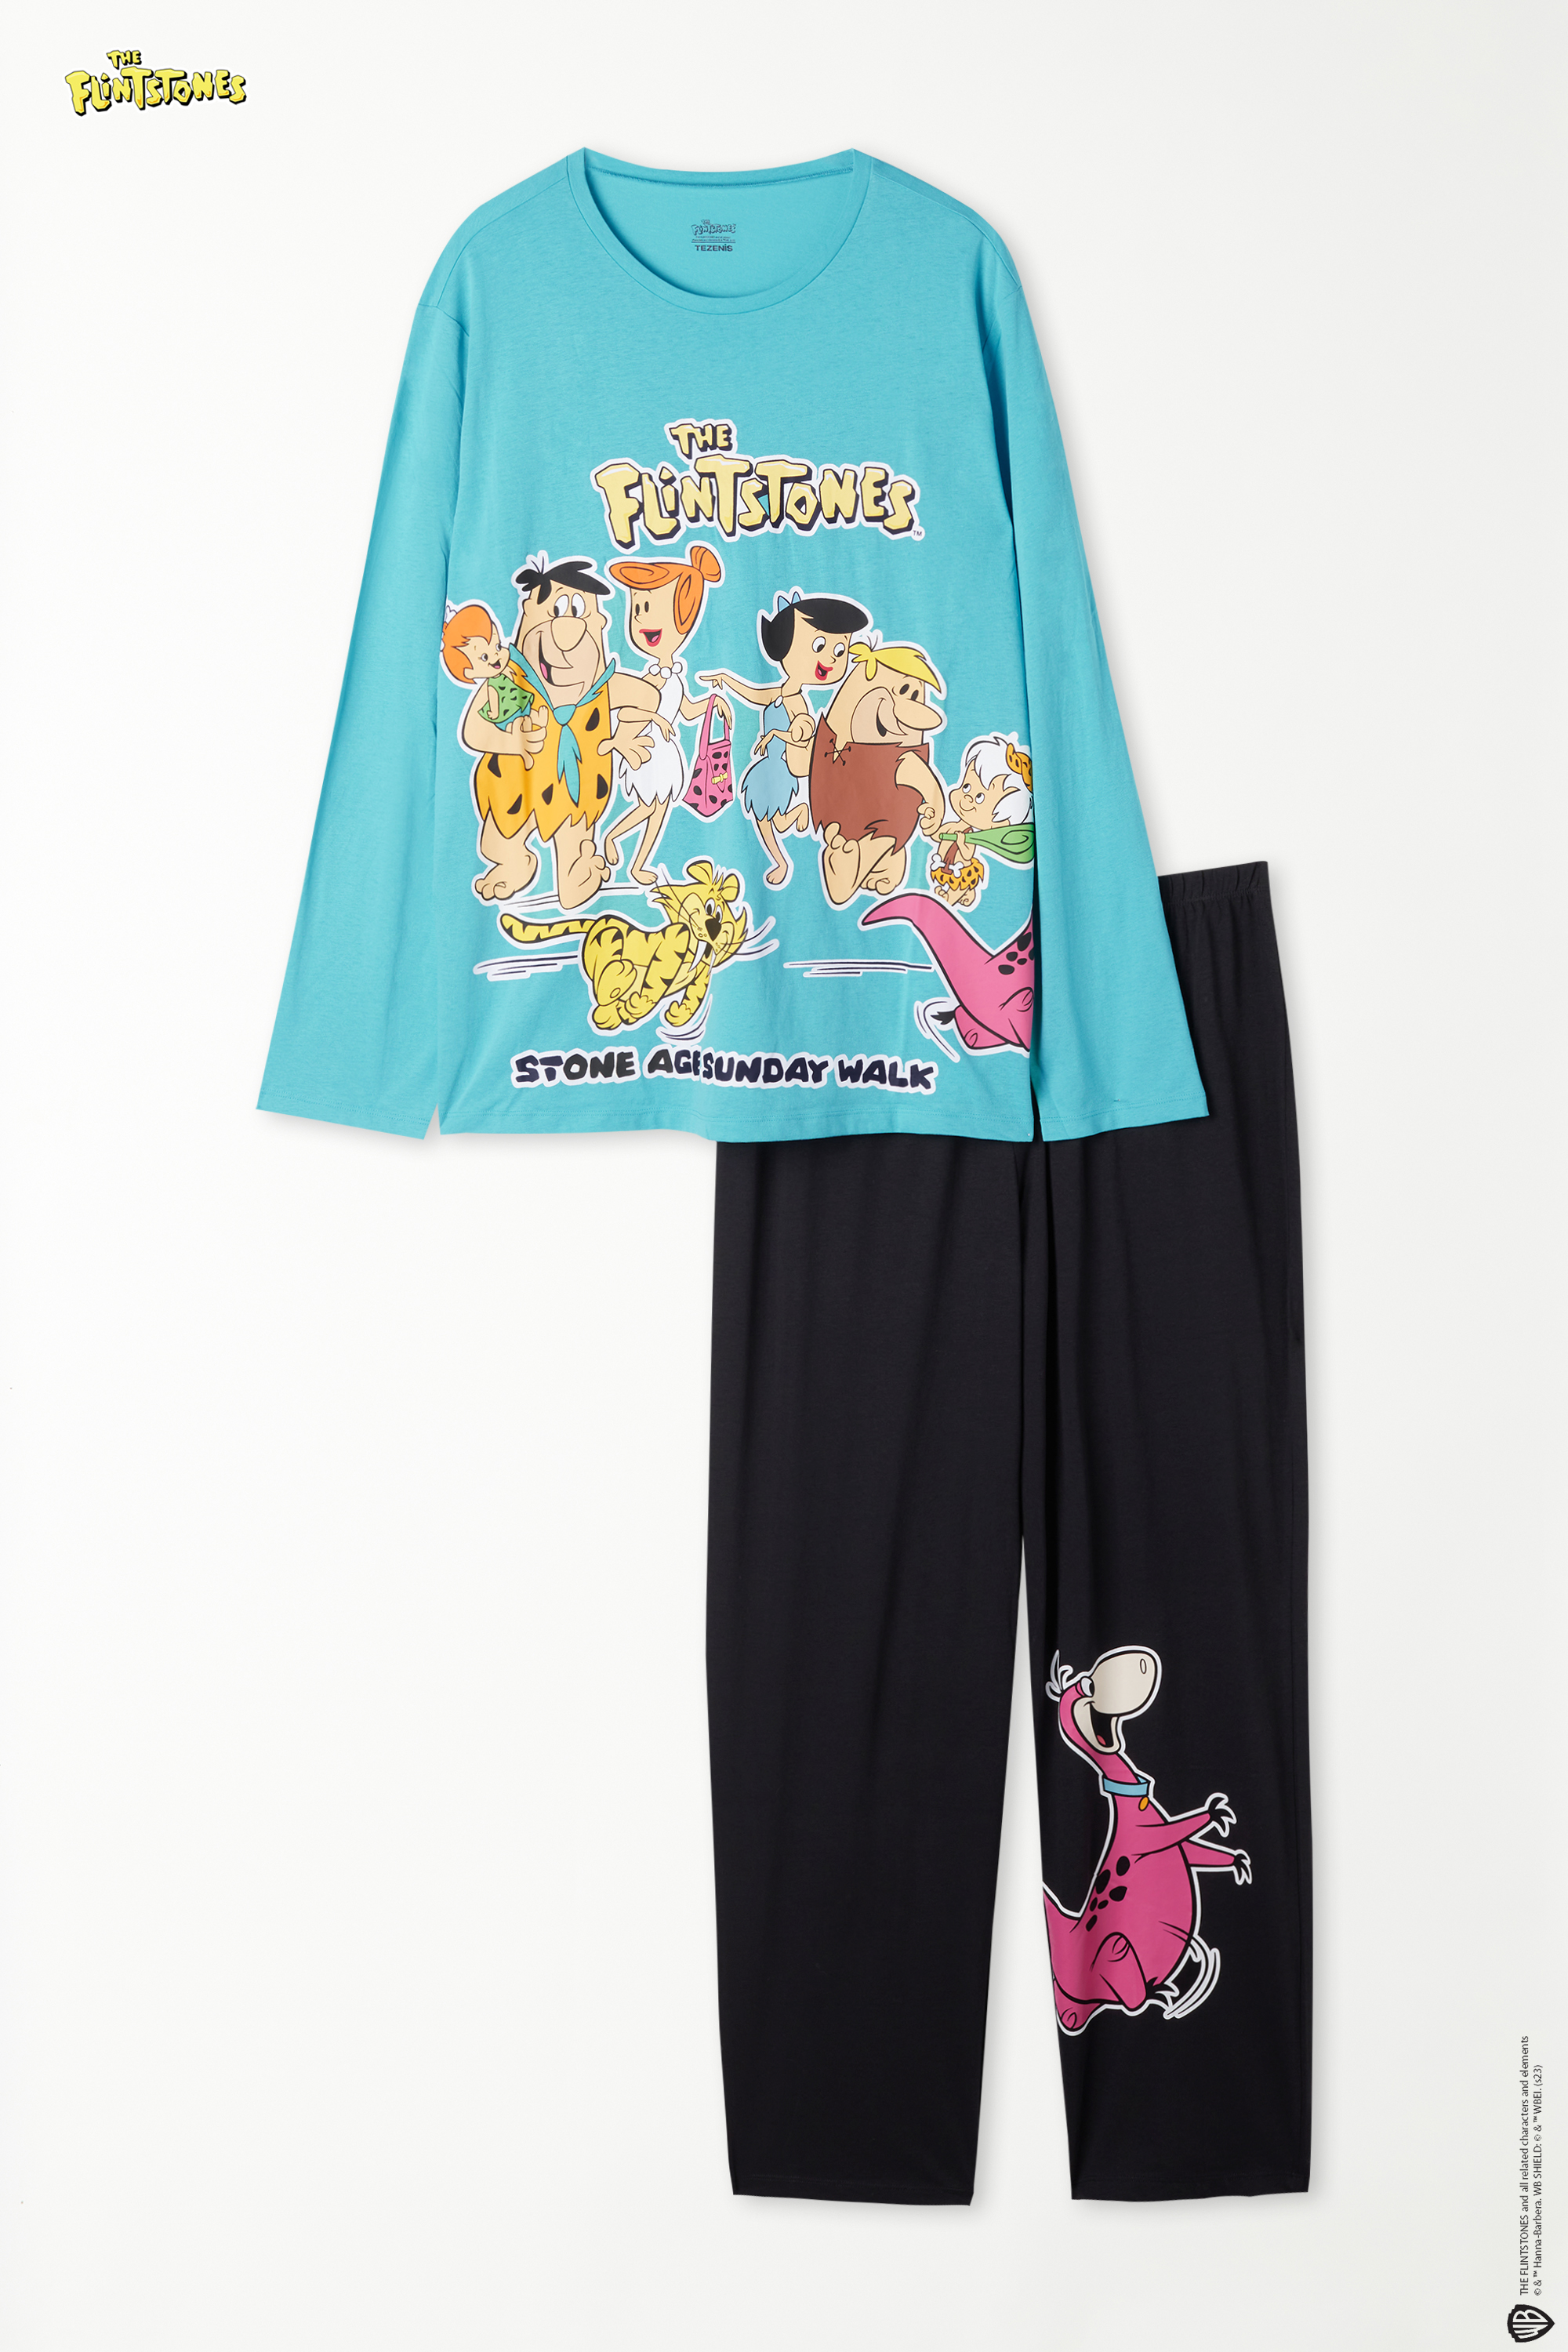 Men’s Full-Length Cotton Pajamas with Flintstones Print